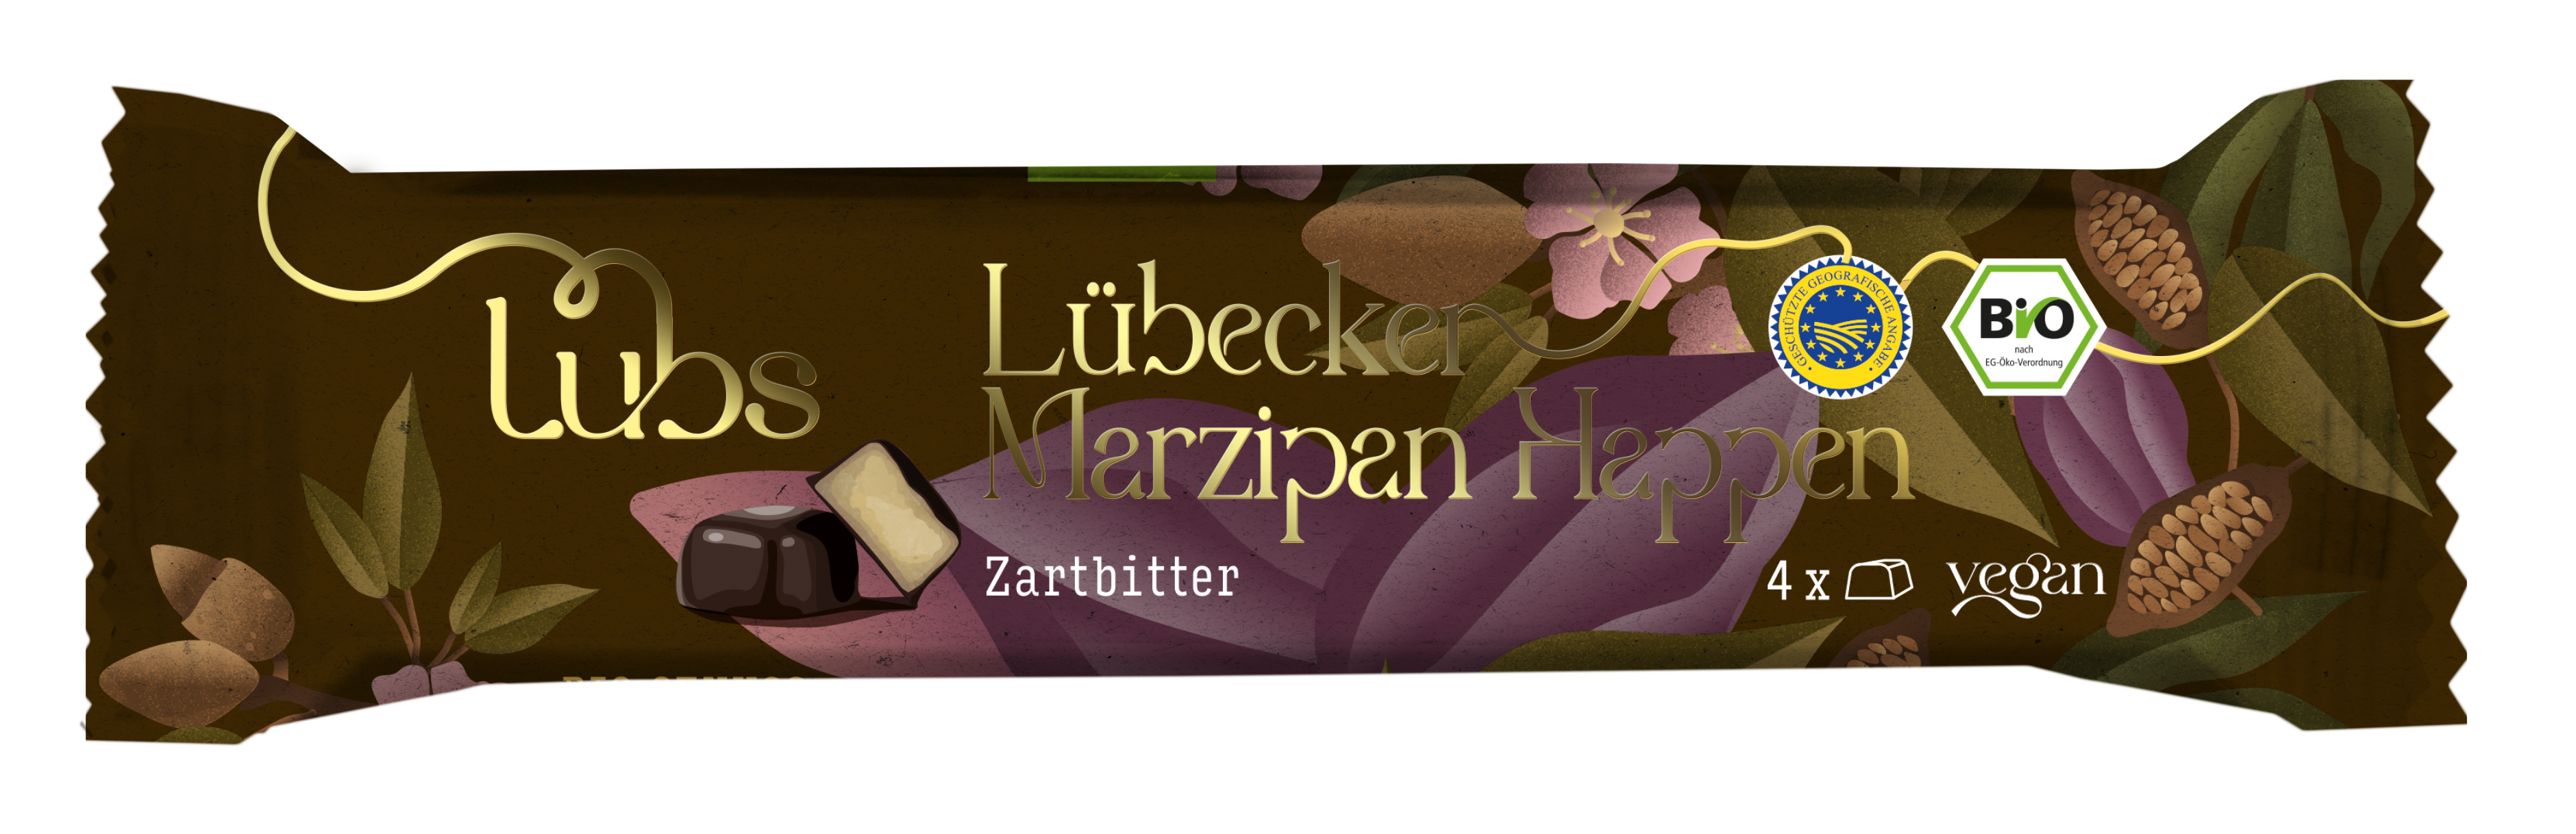 Lübecker Marzipanhappen Zartbitter